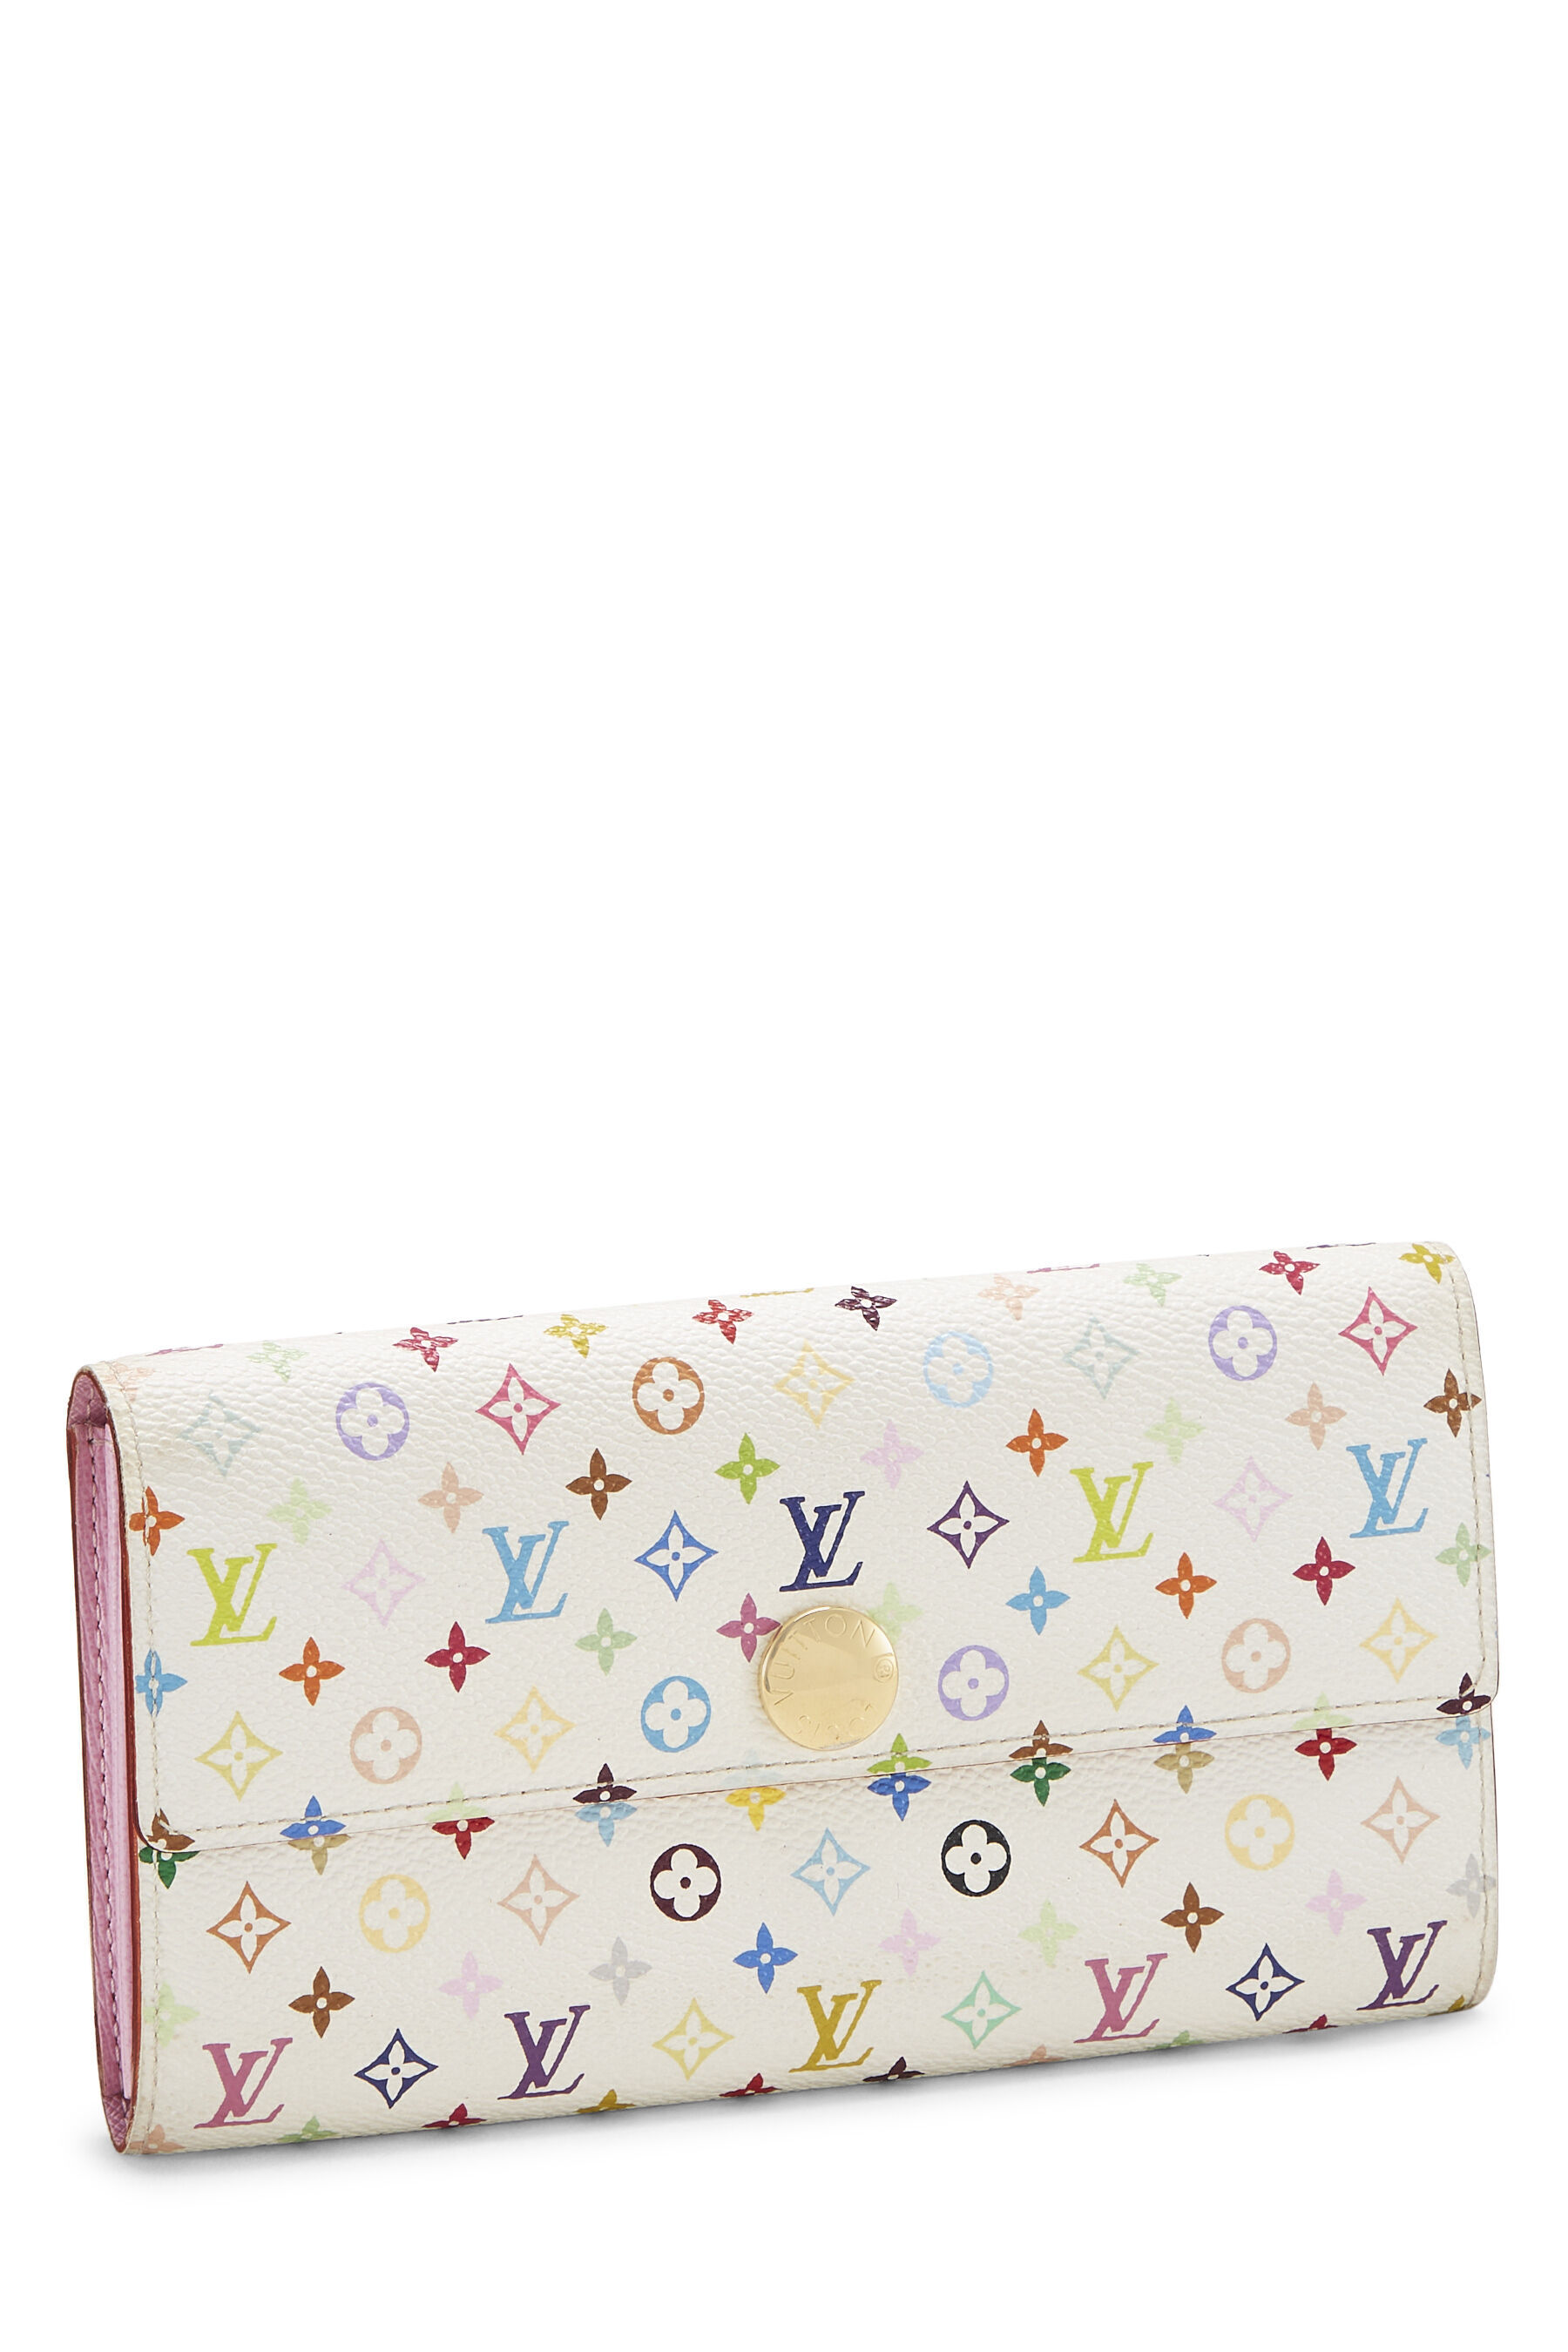 Louis Vuitton Multicolor Wallets for Women for sale  eBay